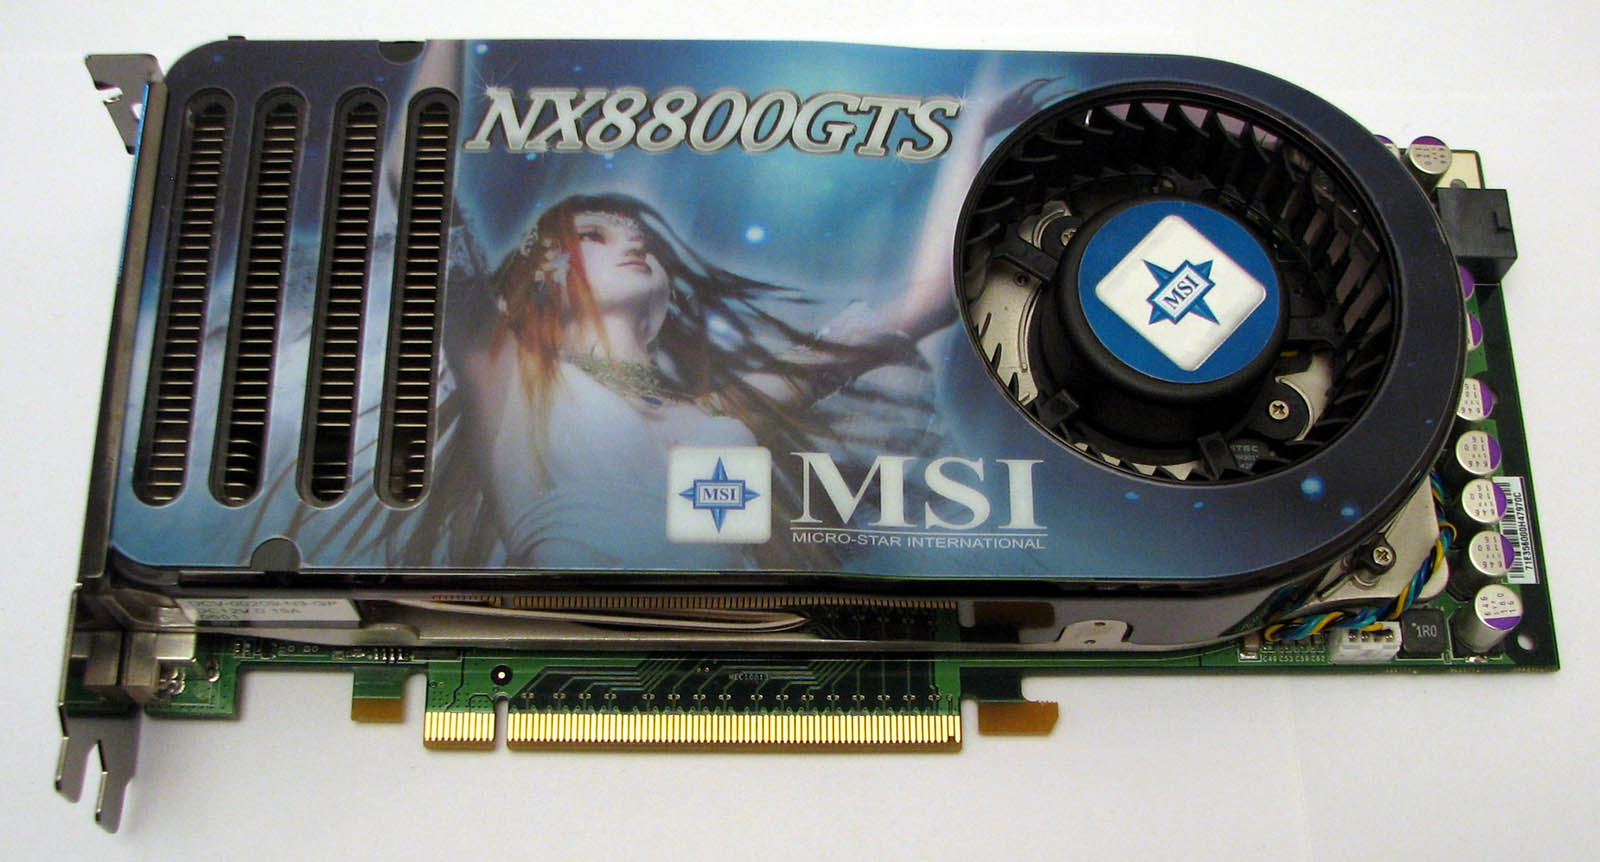 Geforce 8800 gts. Видеокарта 8800 GTS. Видеокарта nx8800gts MSI. MSI GEFORCE 8800 GTS. MSI GEFORCE 8800 GTX.